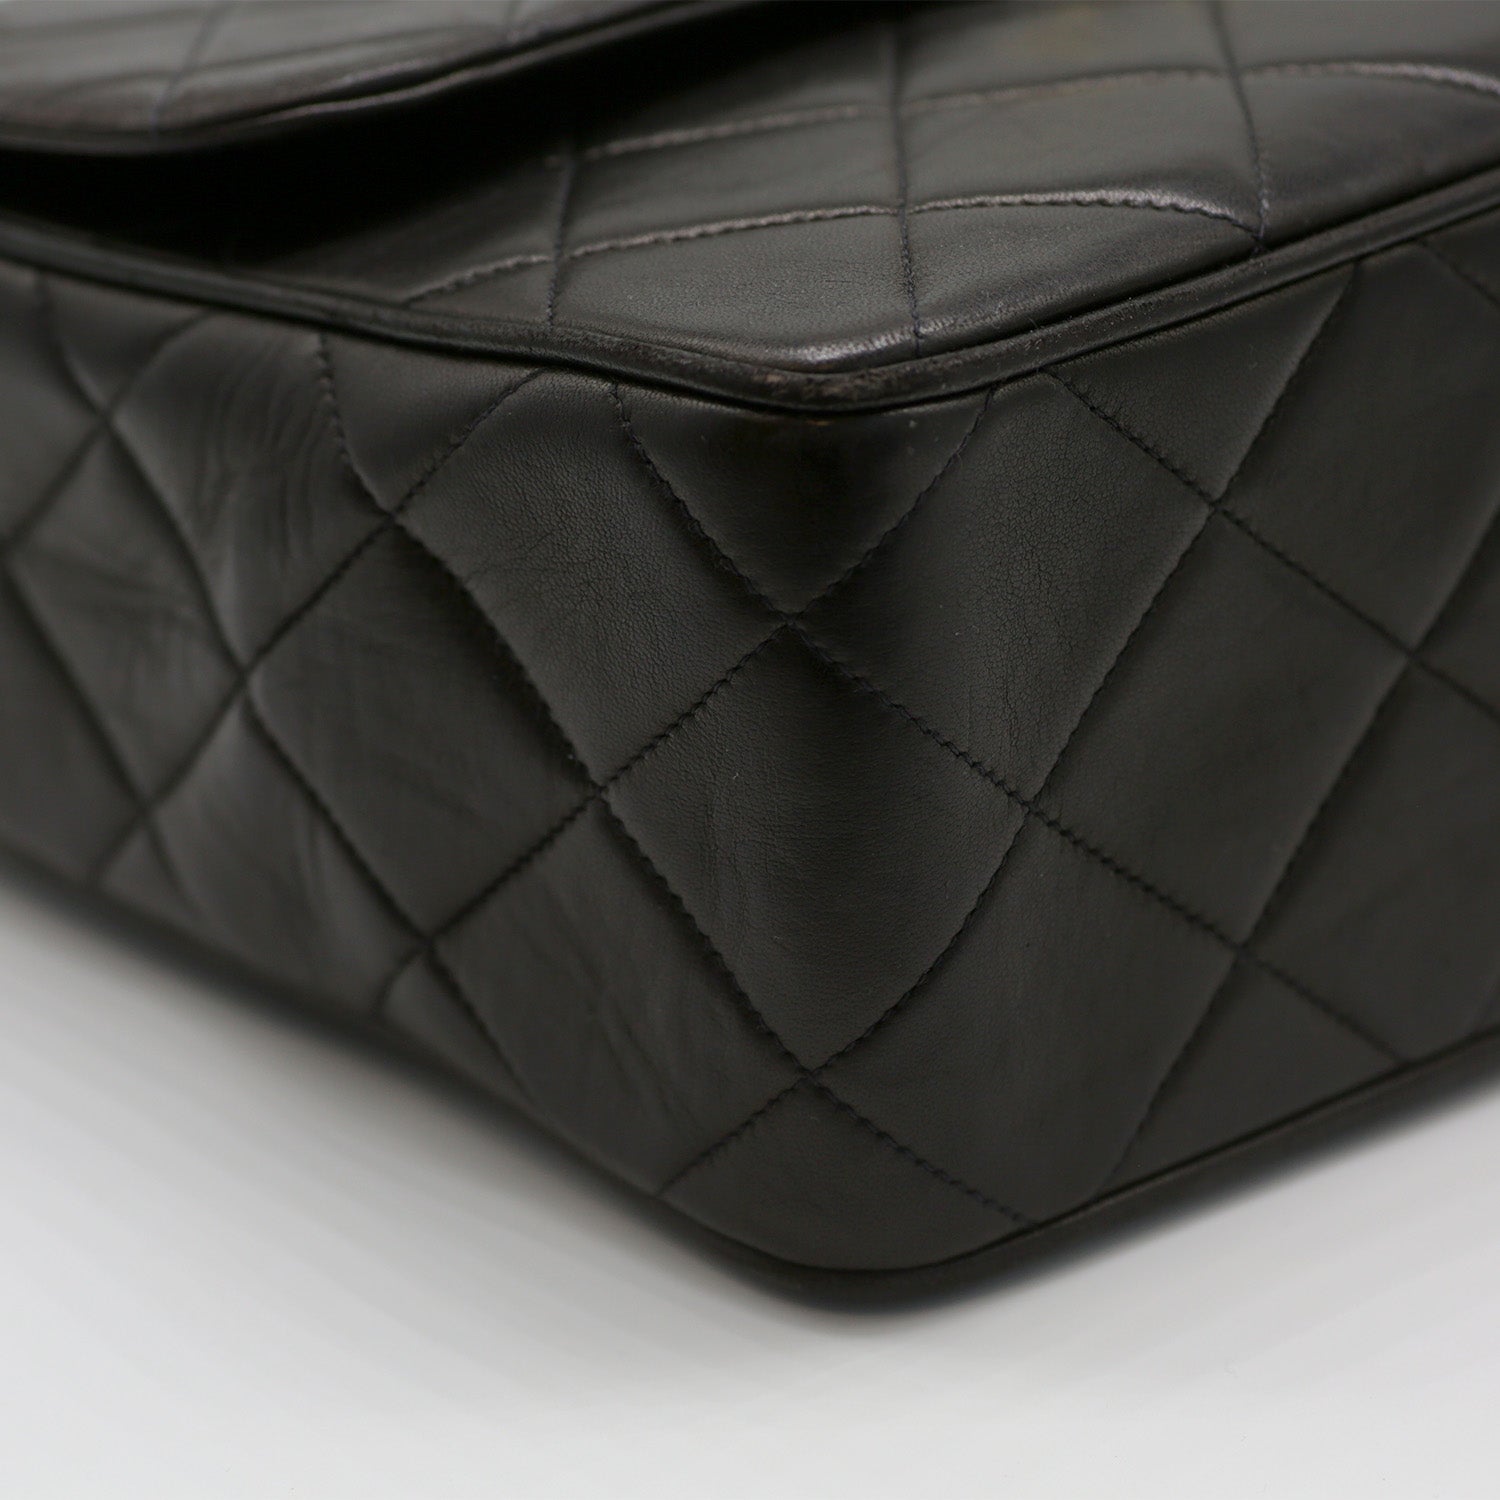 CHANEL Classic Flap Mini Square Chain Shoulder Bag Black Caviar Leather Rare